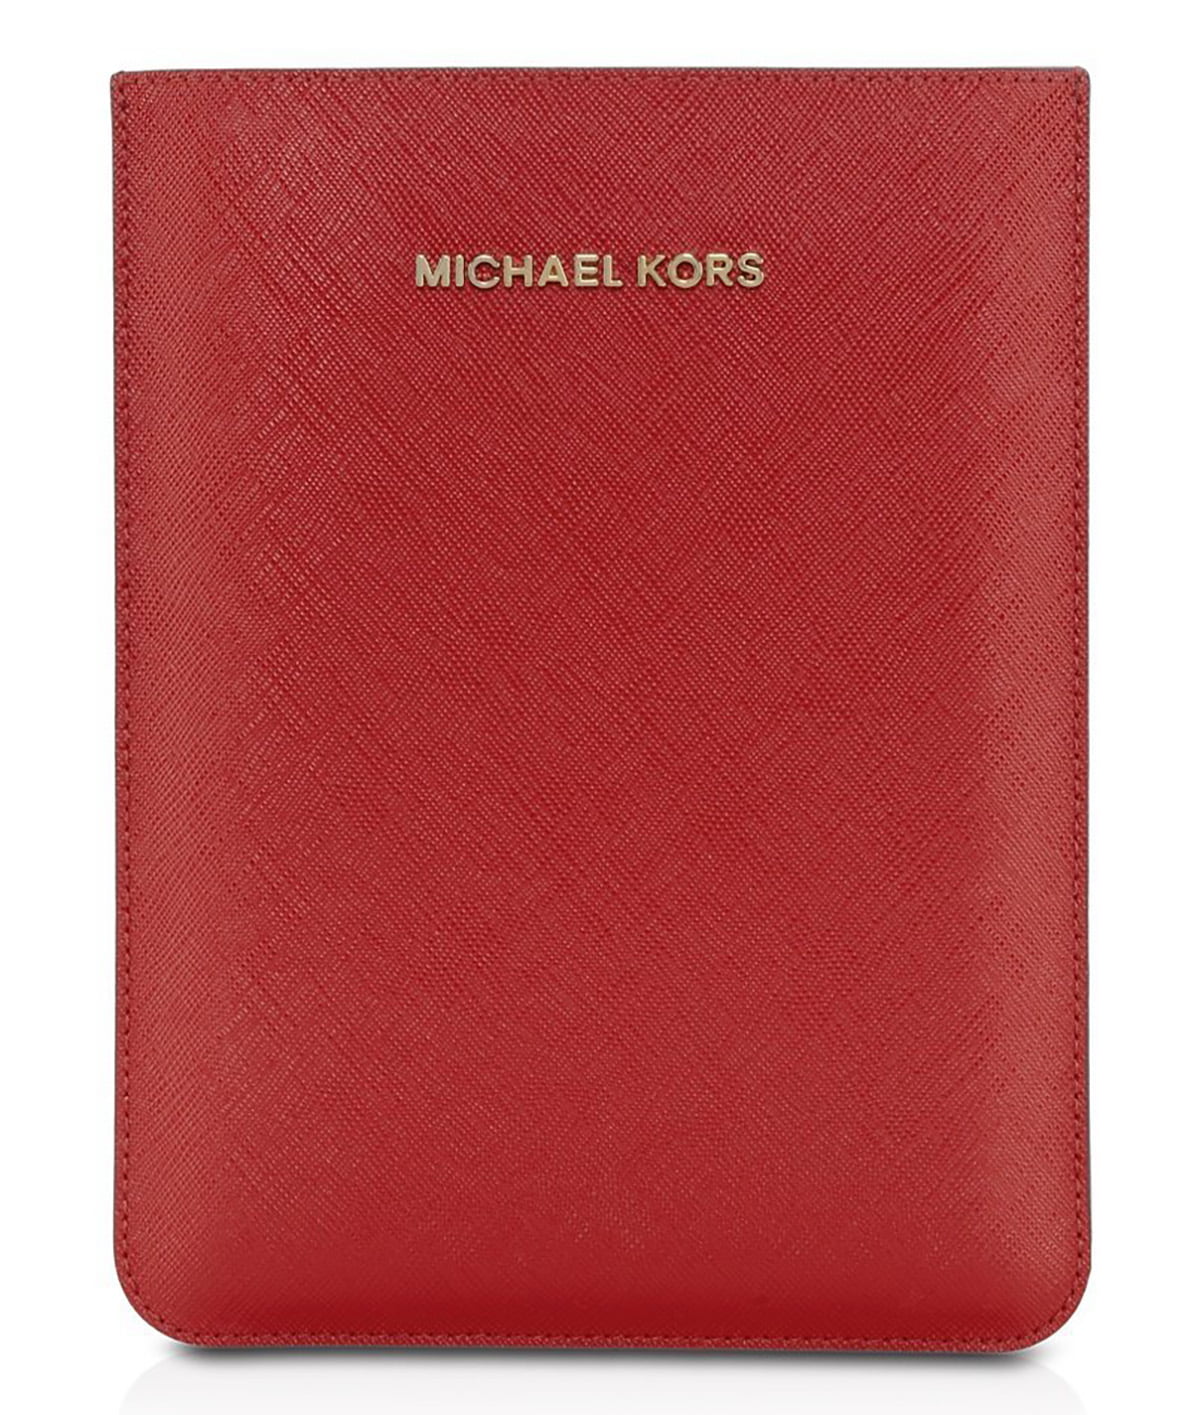 Michael Kors iPad Mini Sleeve/Pouch - Red 